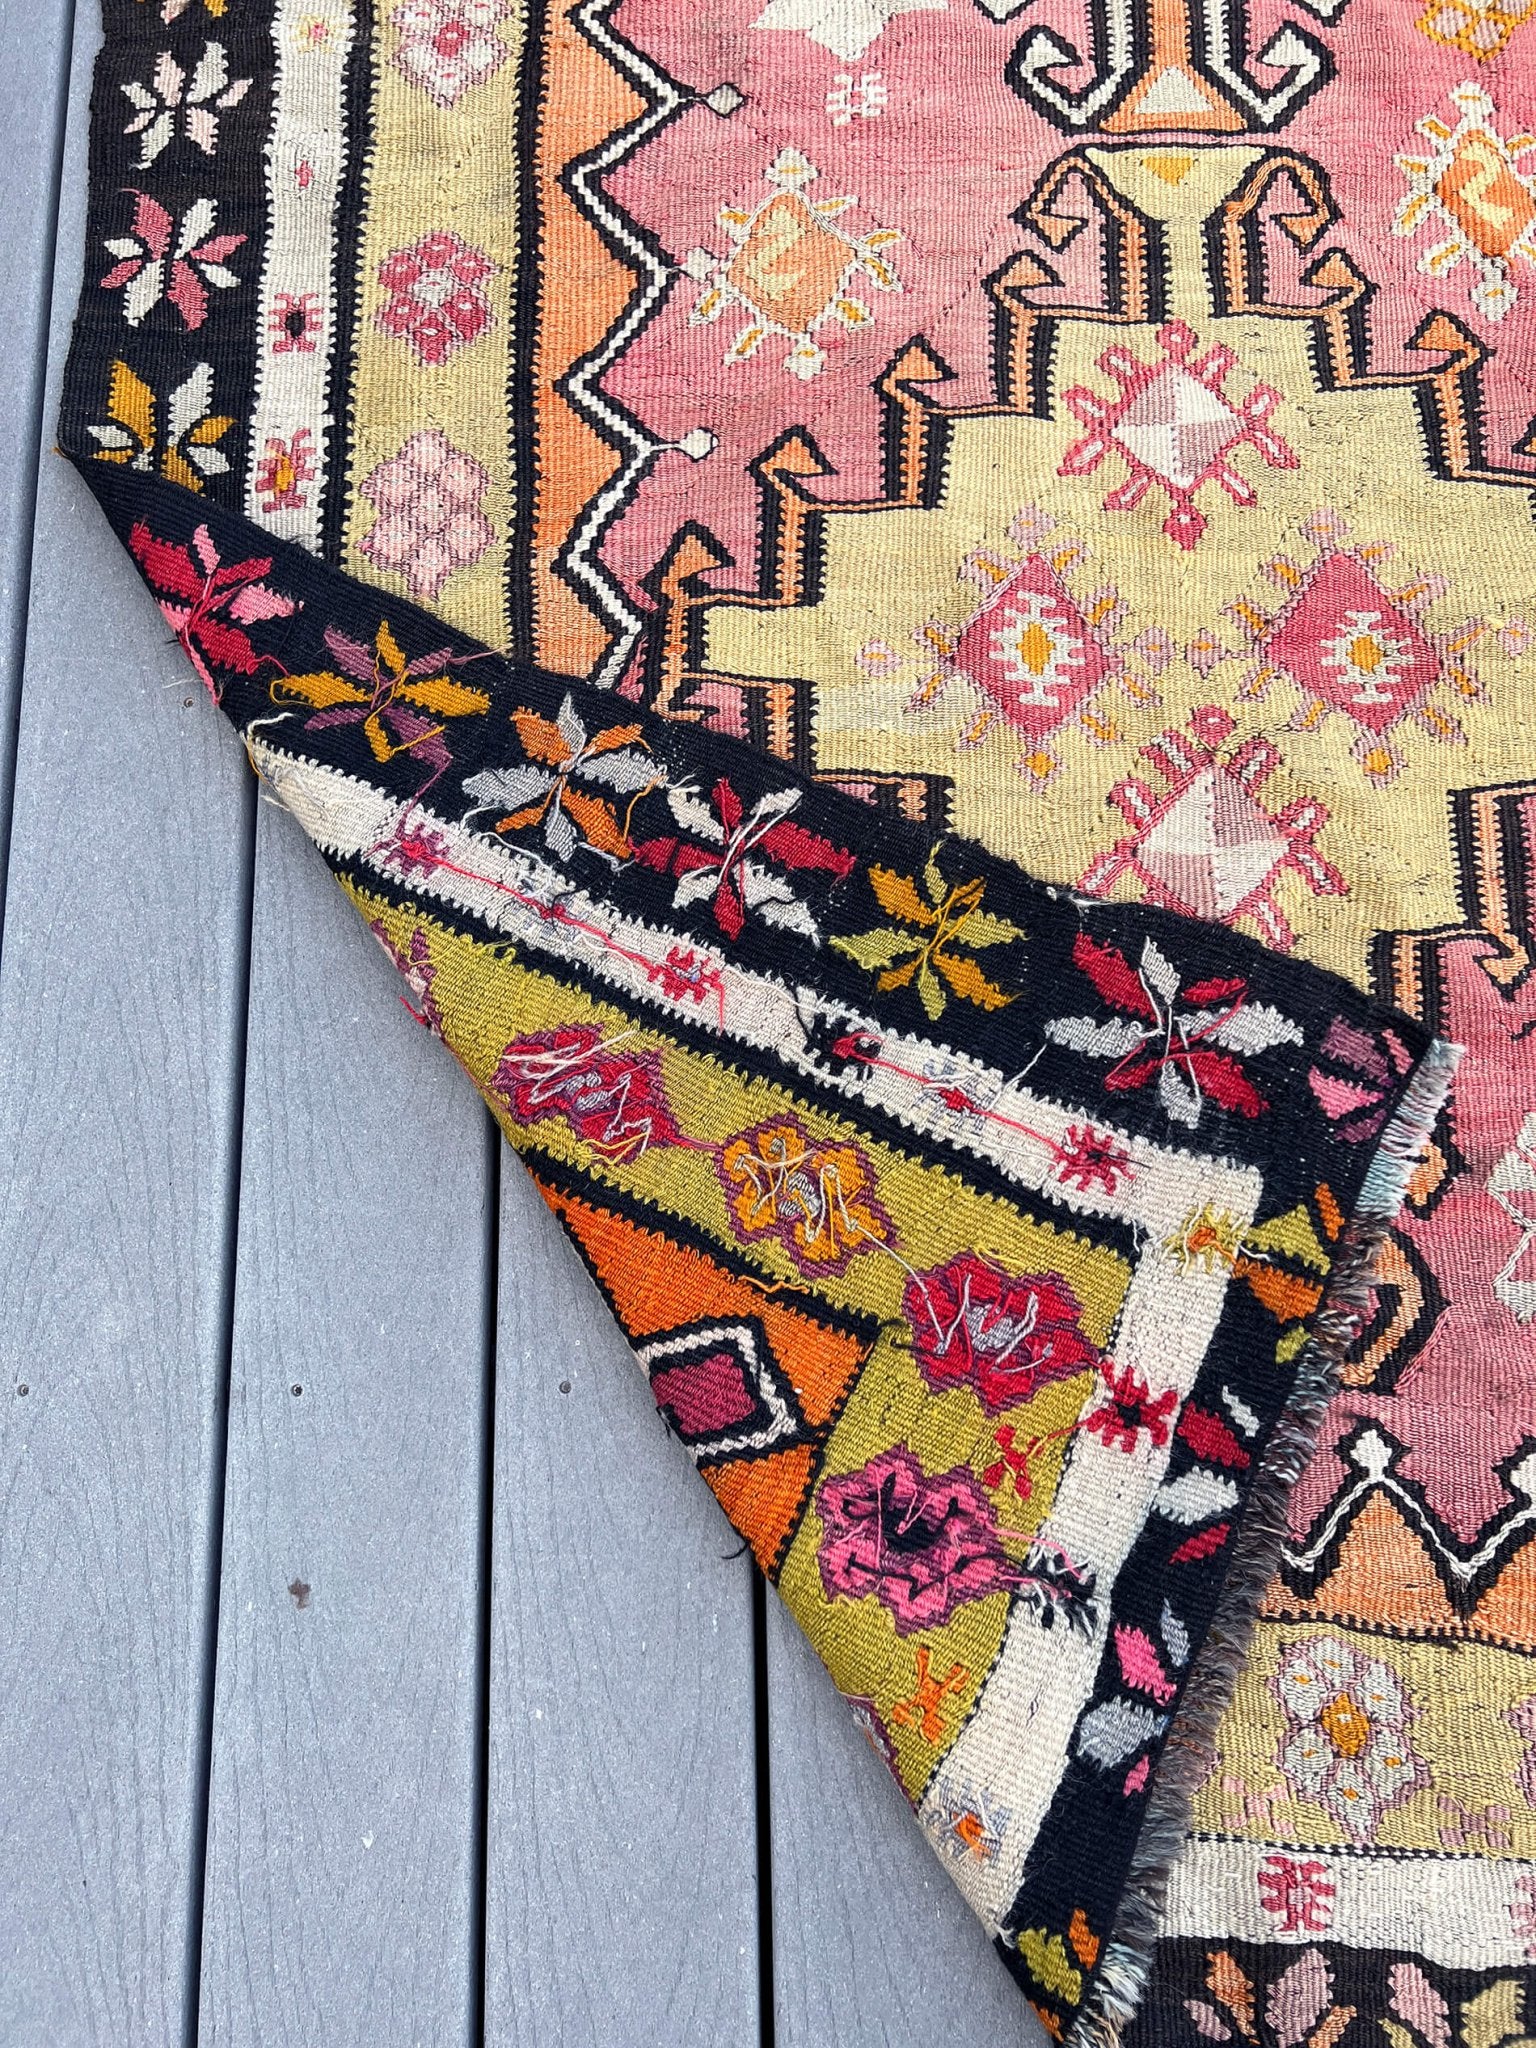 Kars vintage turkish kilim runner rug shop san francisco bay area berkeley. Buy kilim rug online canada, free shipping